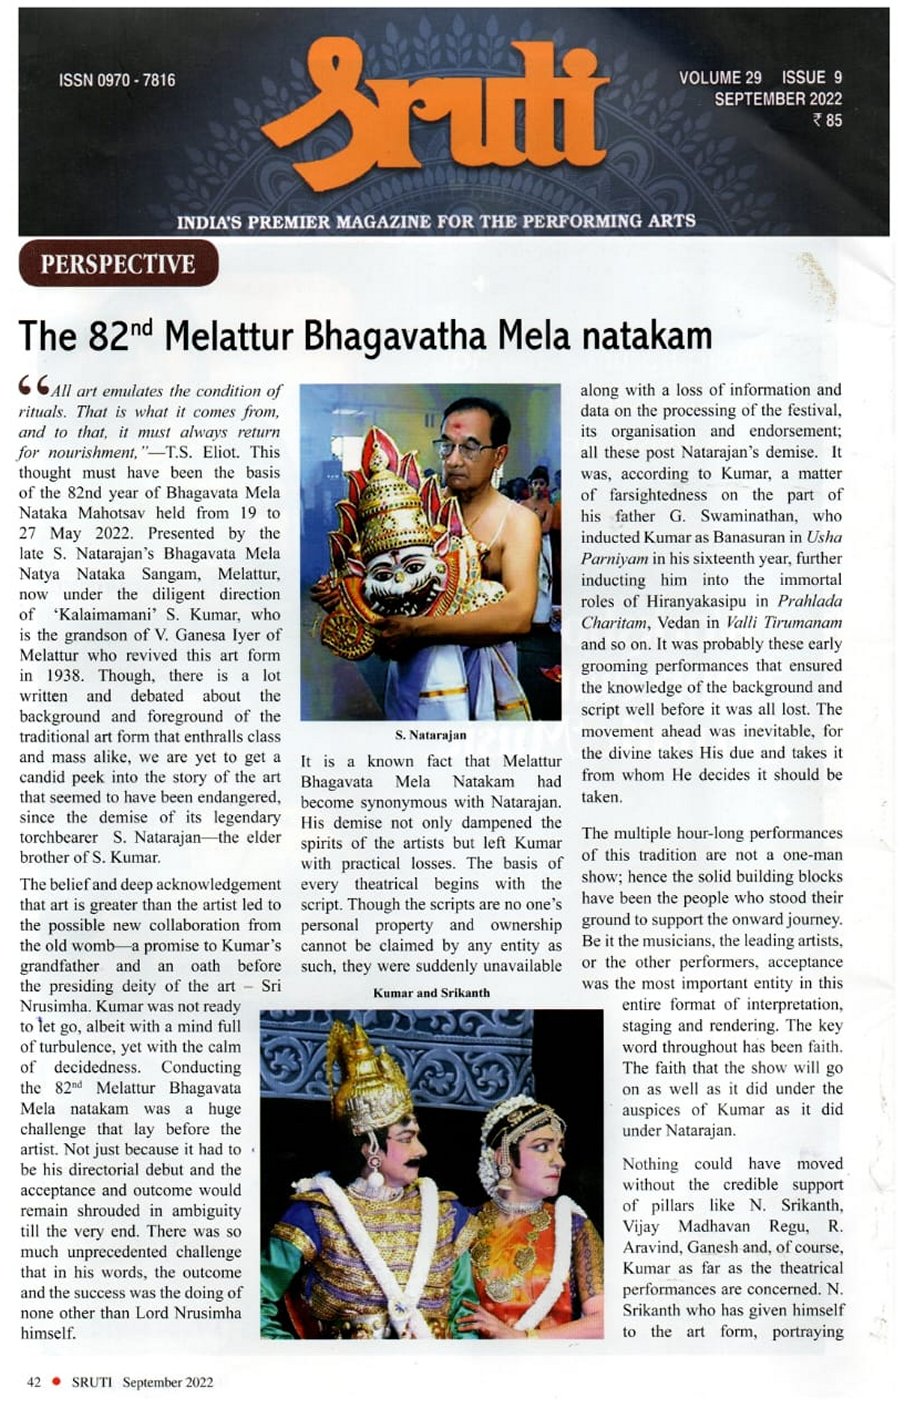 The 82nd Melattur Bhagavata Mela Natakam - Sruti